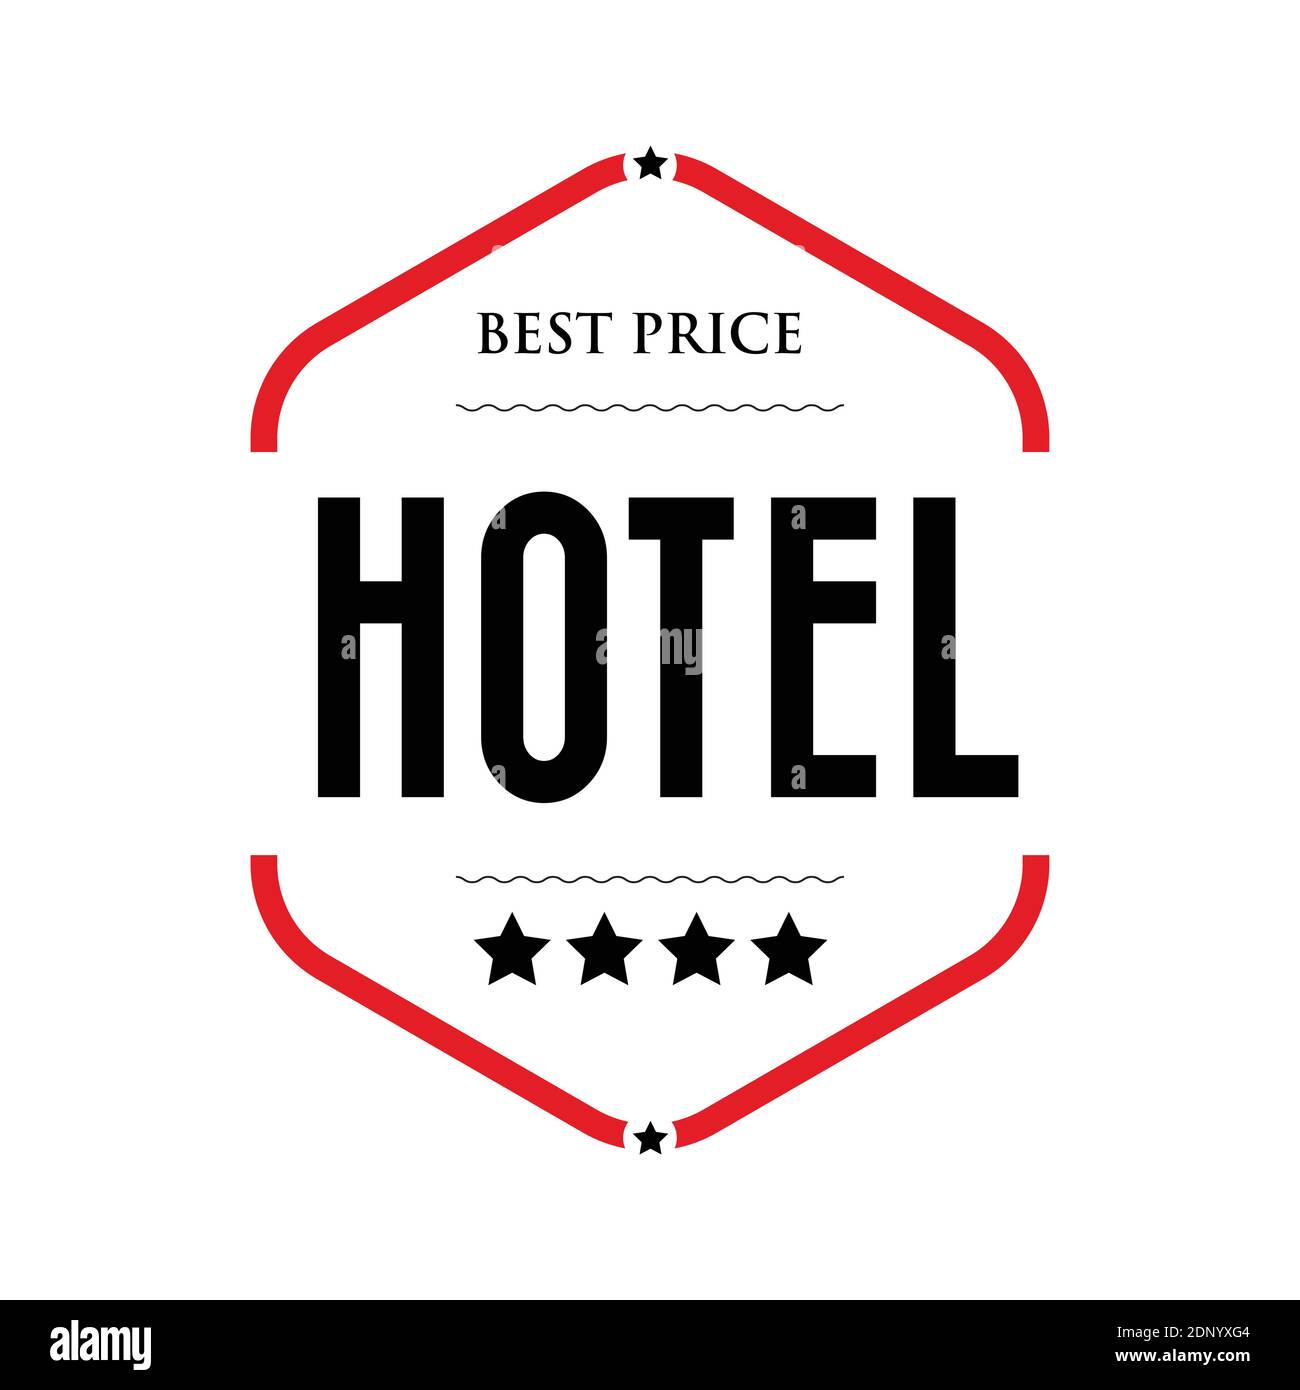 Best Price Hotel vintage sign Stock Vector